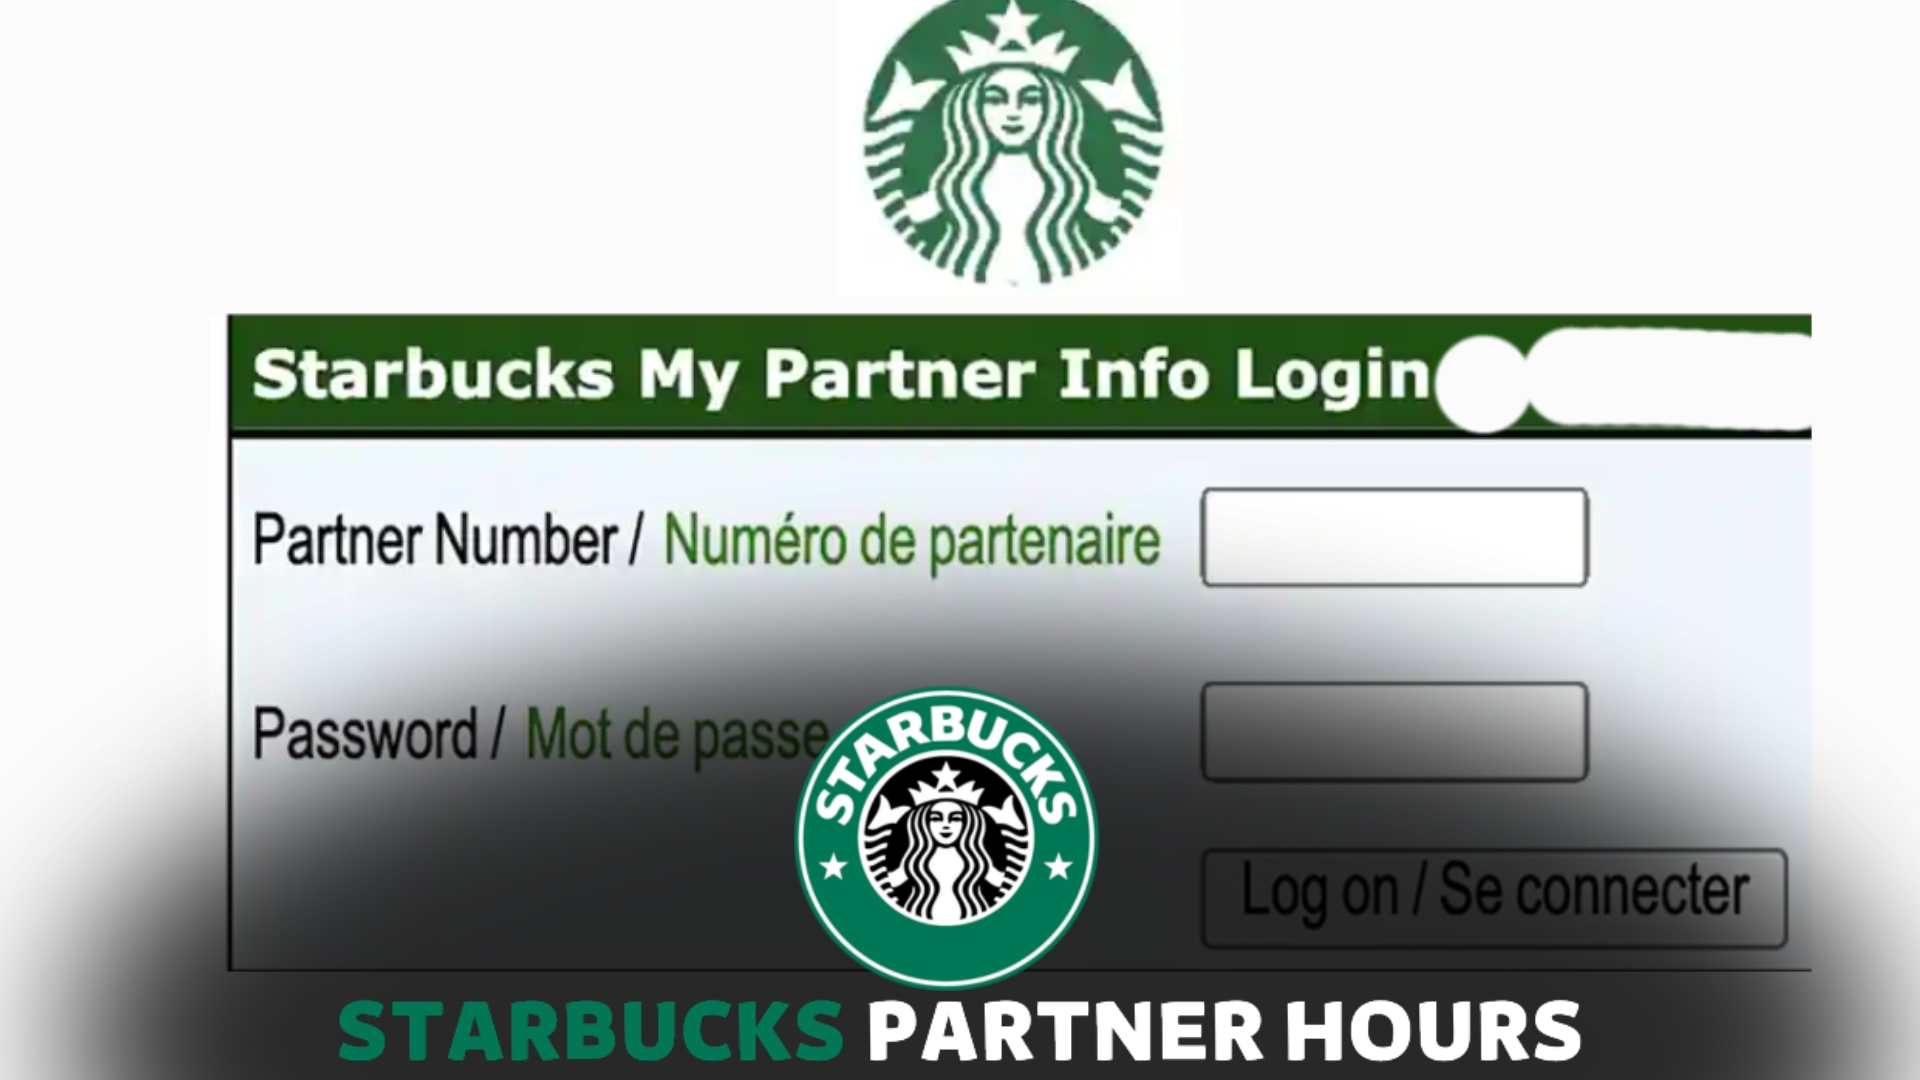 How to Access Benefits Via My Starbucks Partner Info